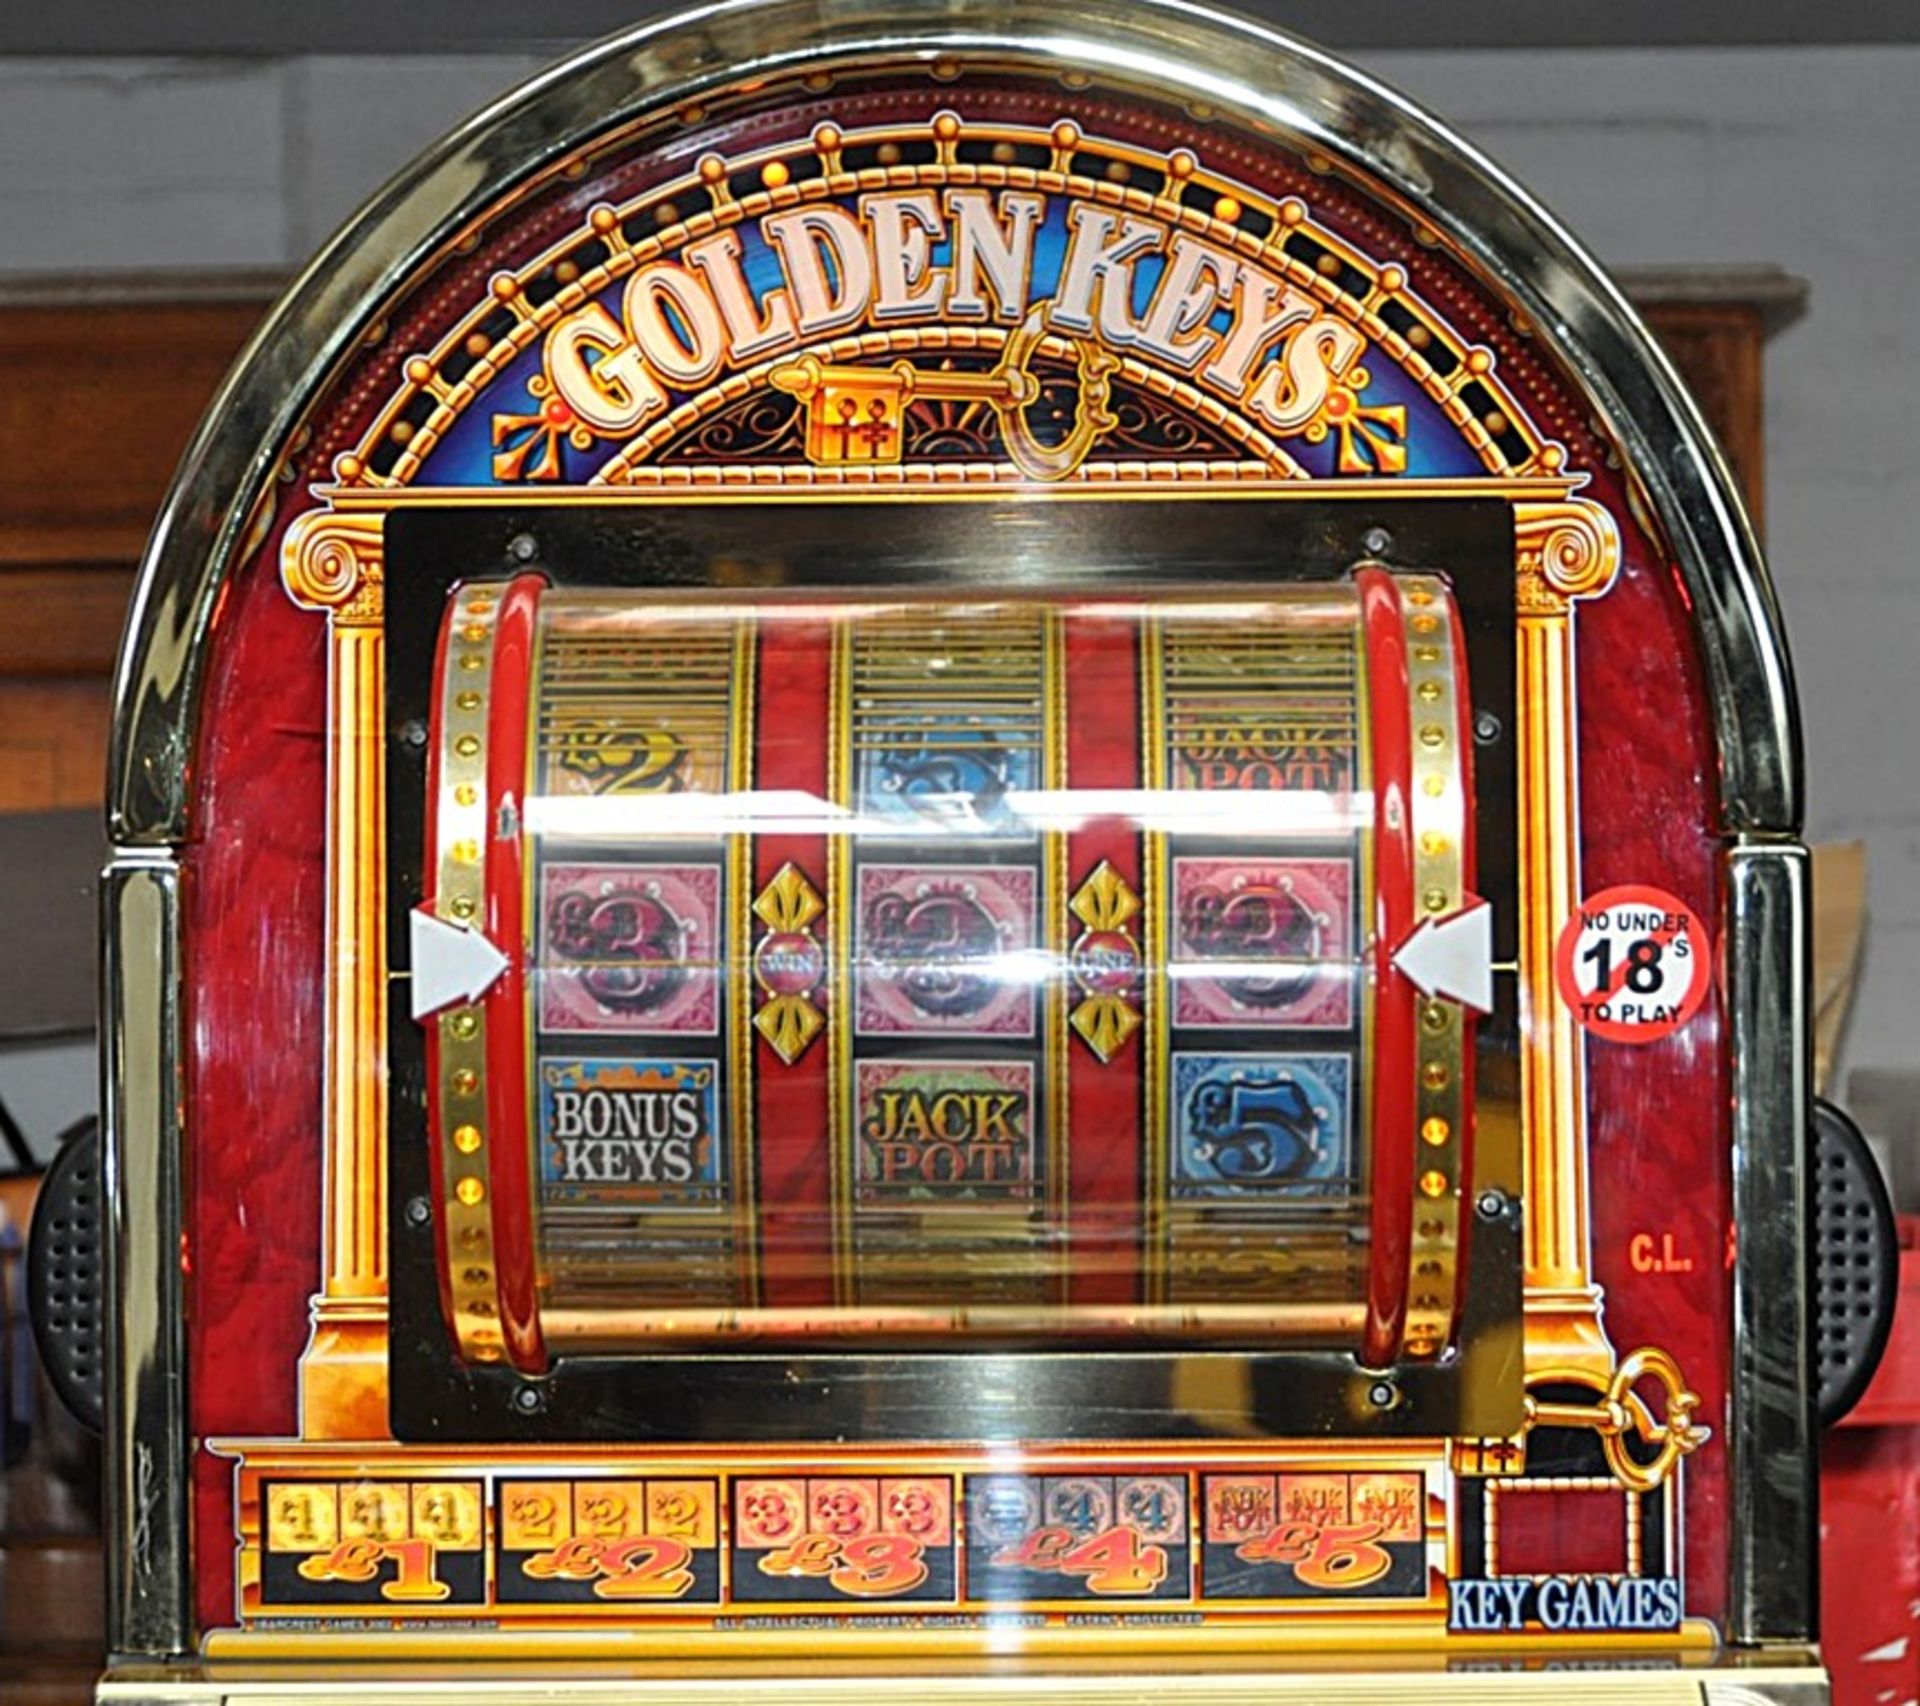 1 x "GOLDEN KEYS" Arcade Fruit Machine - Manufacturer: Barcrest - Pre-Owned In Good Working